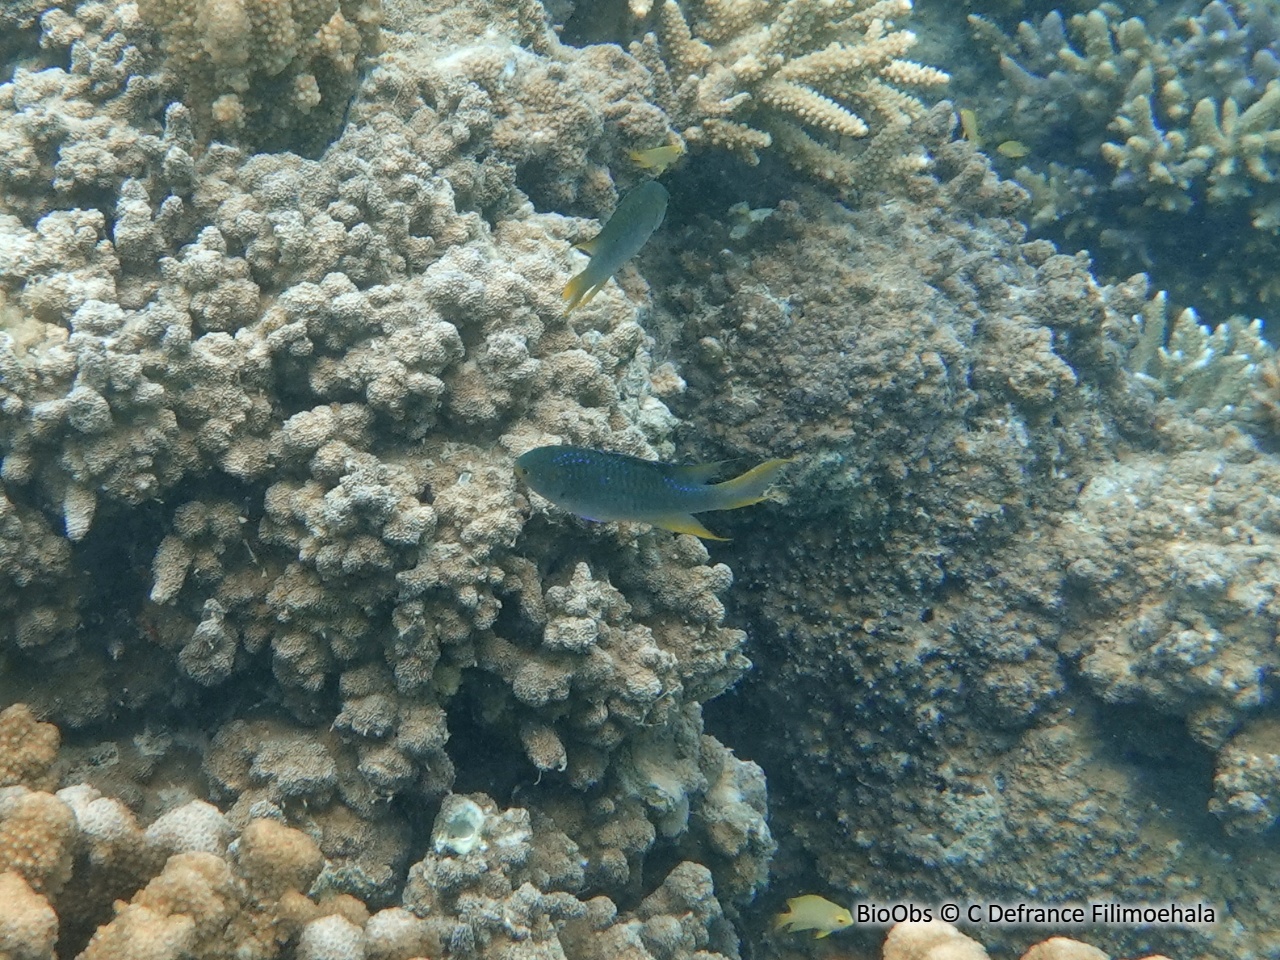 Demoiselle corail - Neopomacentrus nemurus - C Defrance Filimoehala - BioObs